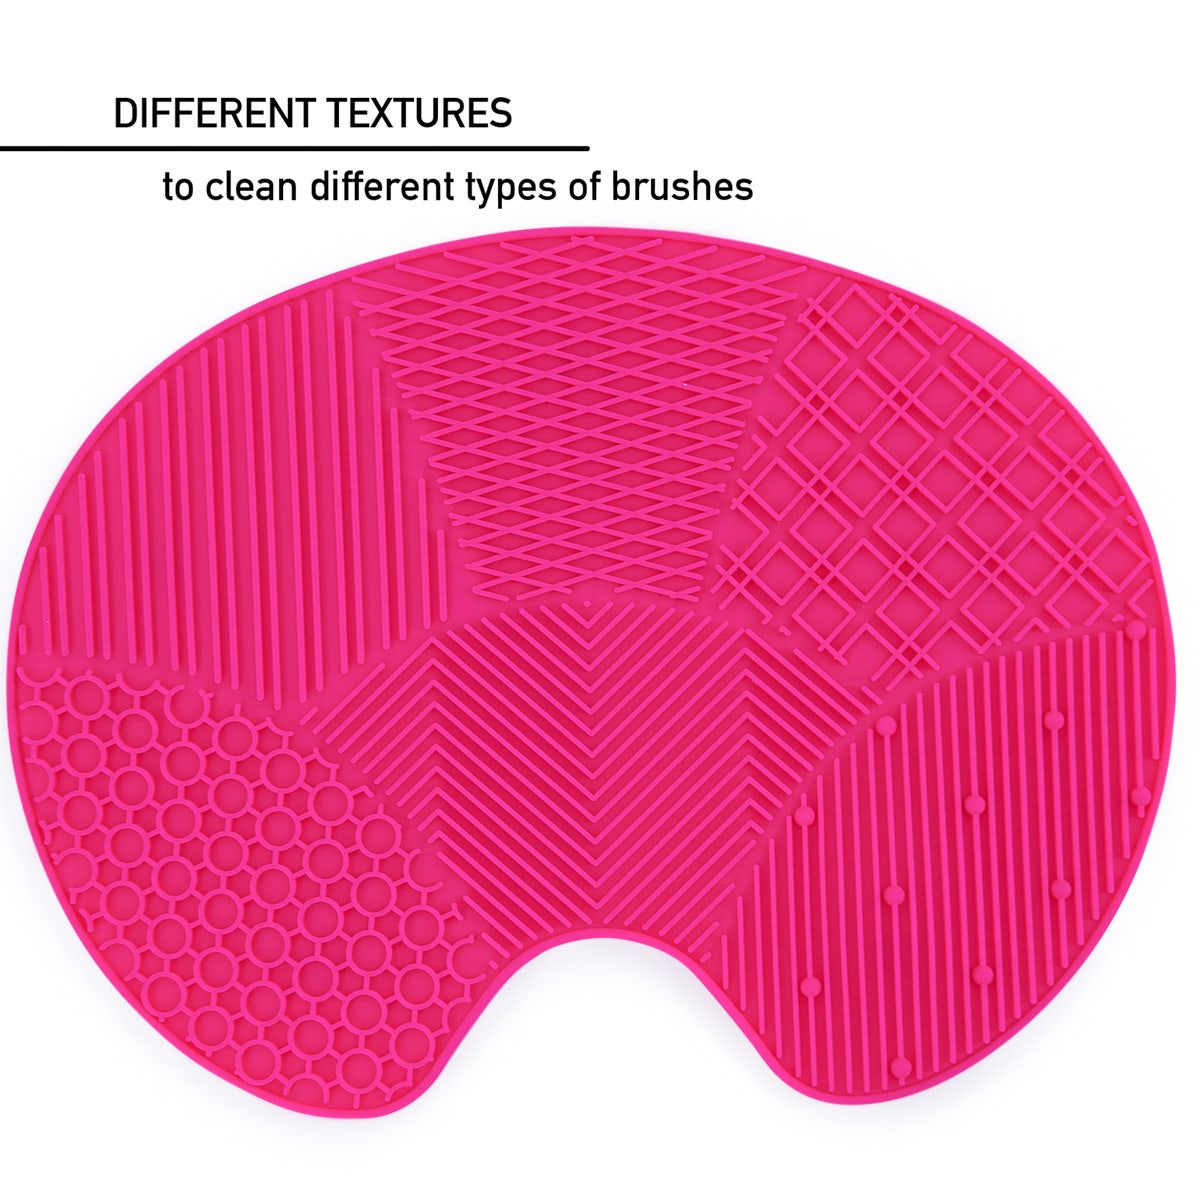 TruBeauty Makeup Brush Cleaning Set – 6 Unique Textures